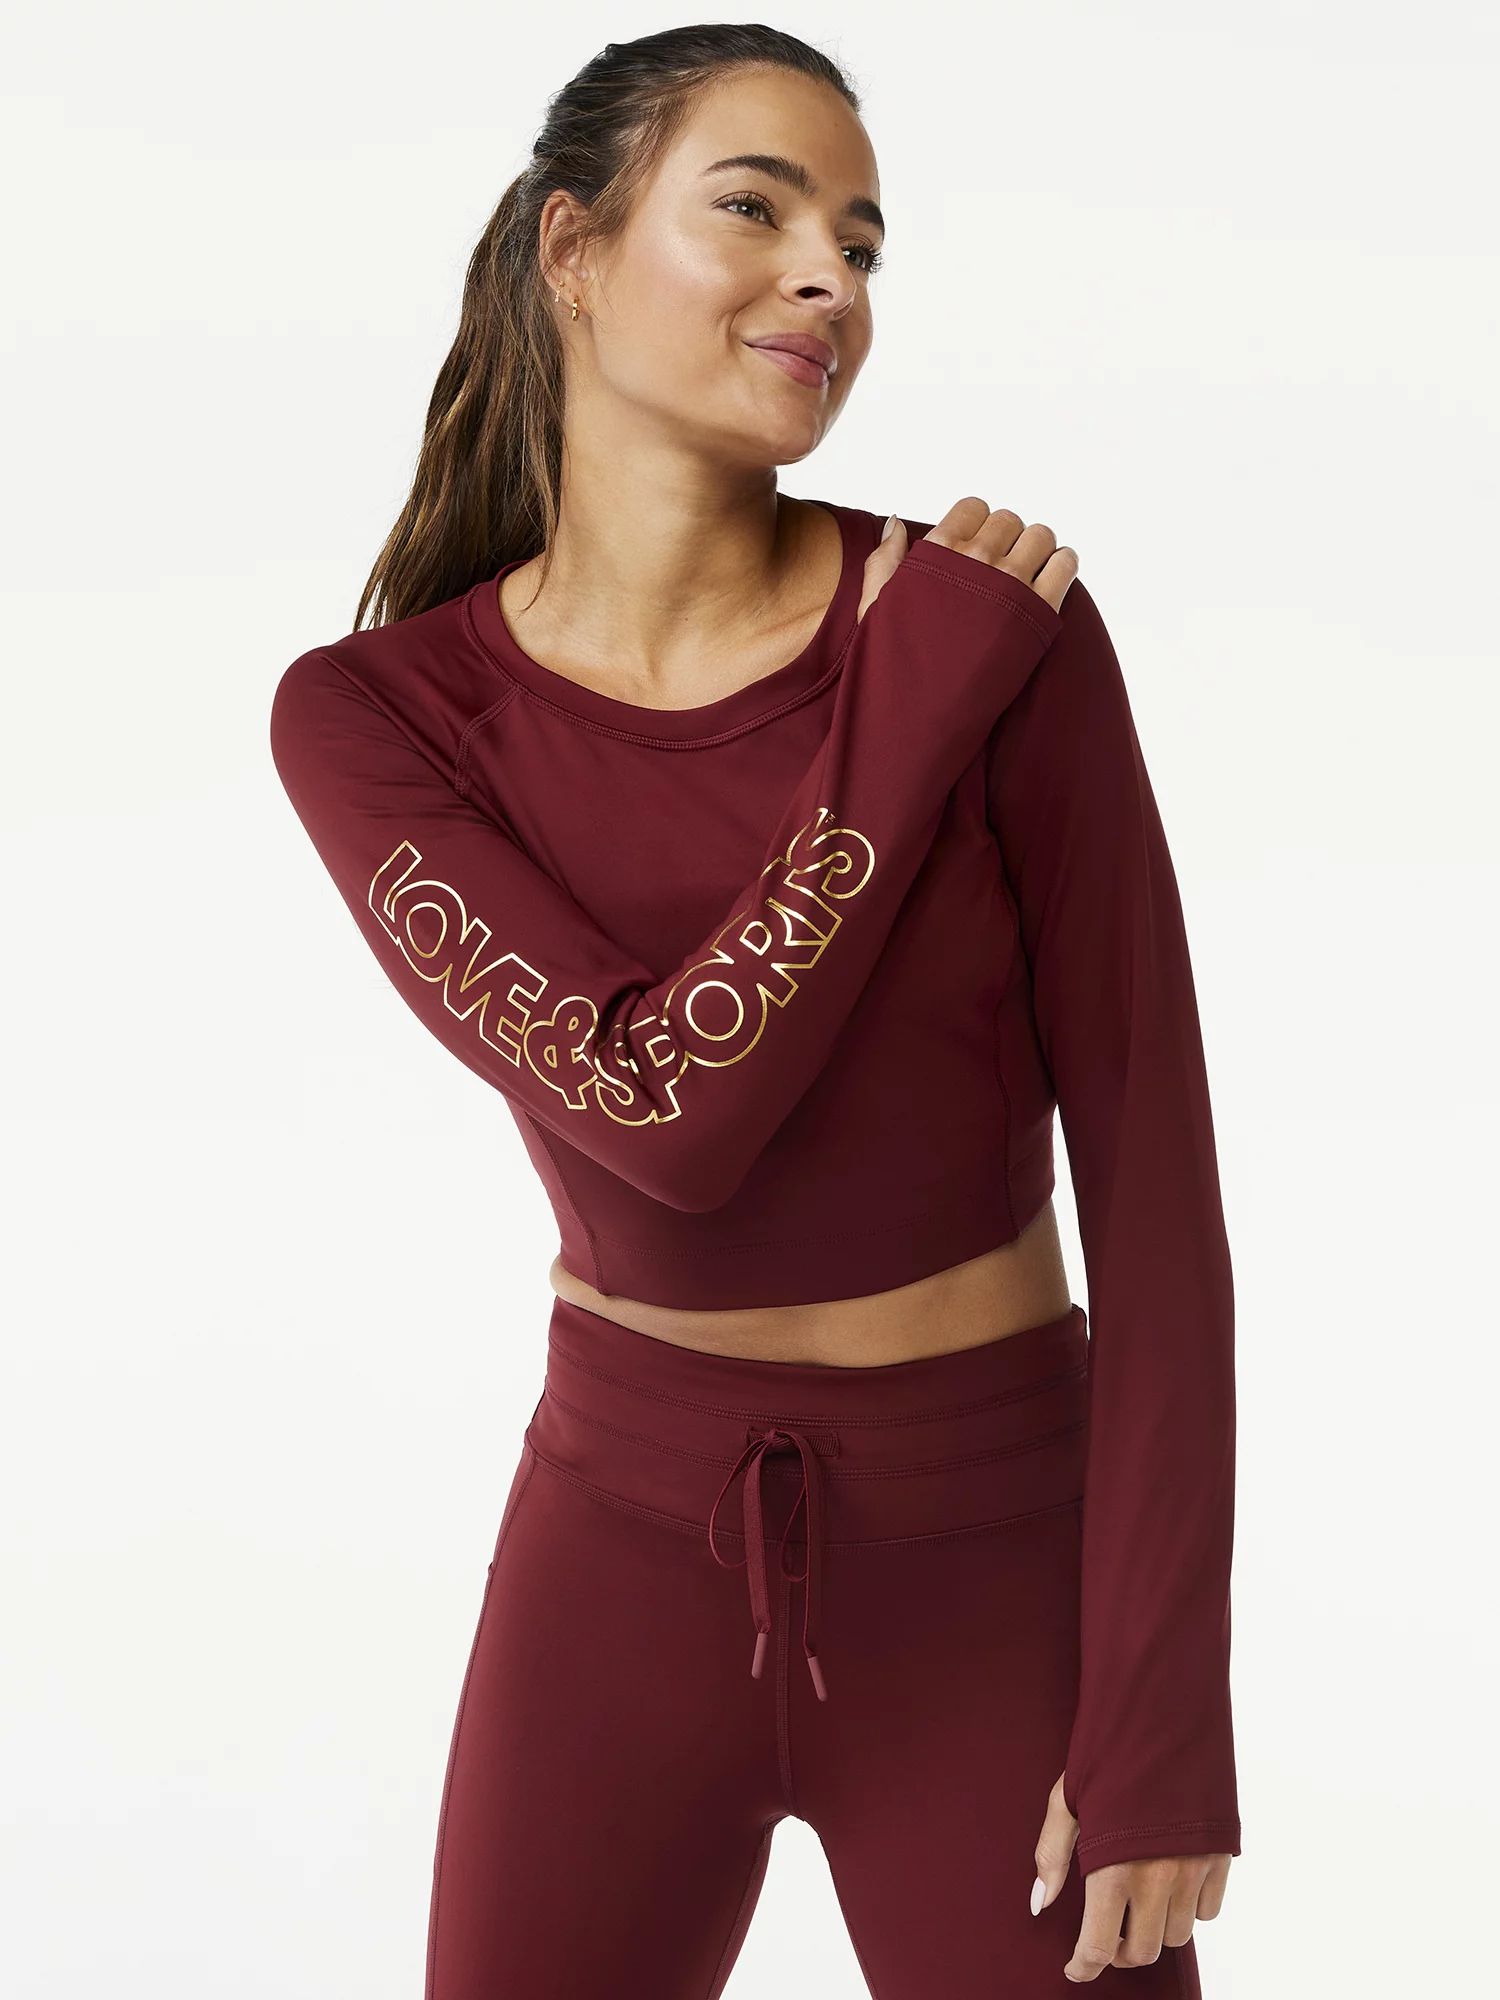 Love & Sports Women’s Long Sleeve Cropped Tee - Walmart.com | Walmart (US)